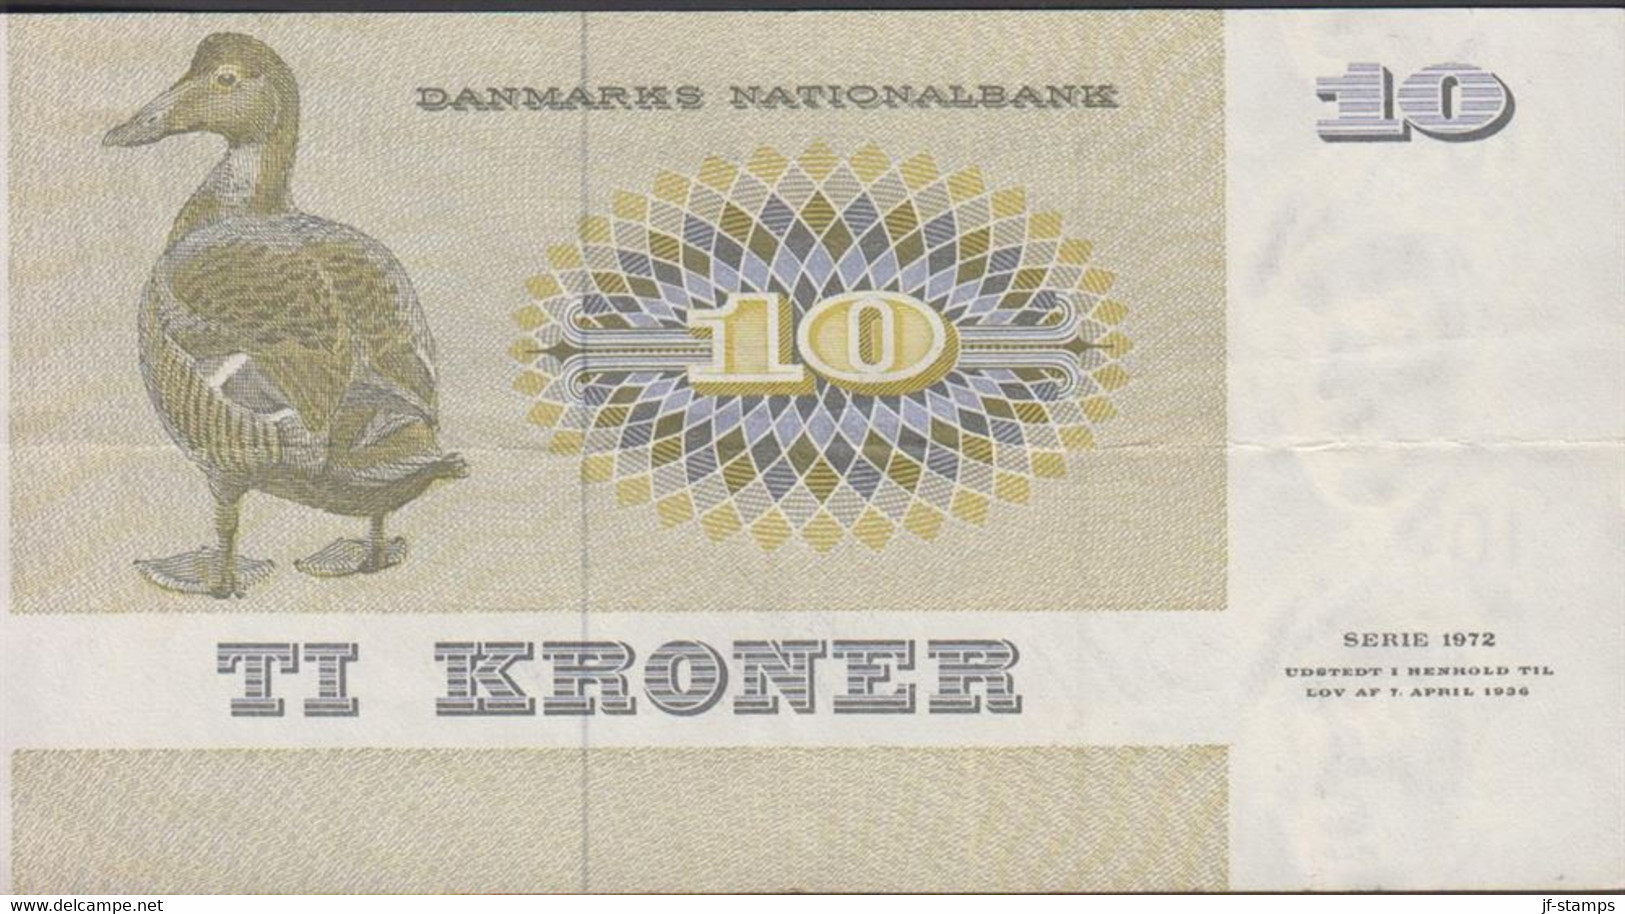 1972. DANMARK. DANMARKS NATIONALBANK 10 KRONER SERIE 1972. Fold.  - JF429806 - Dinamarca